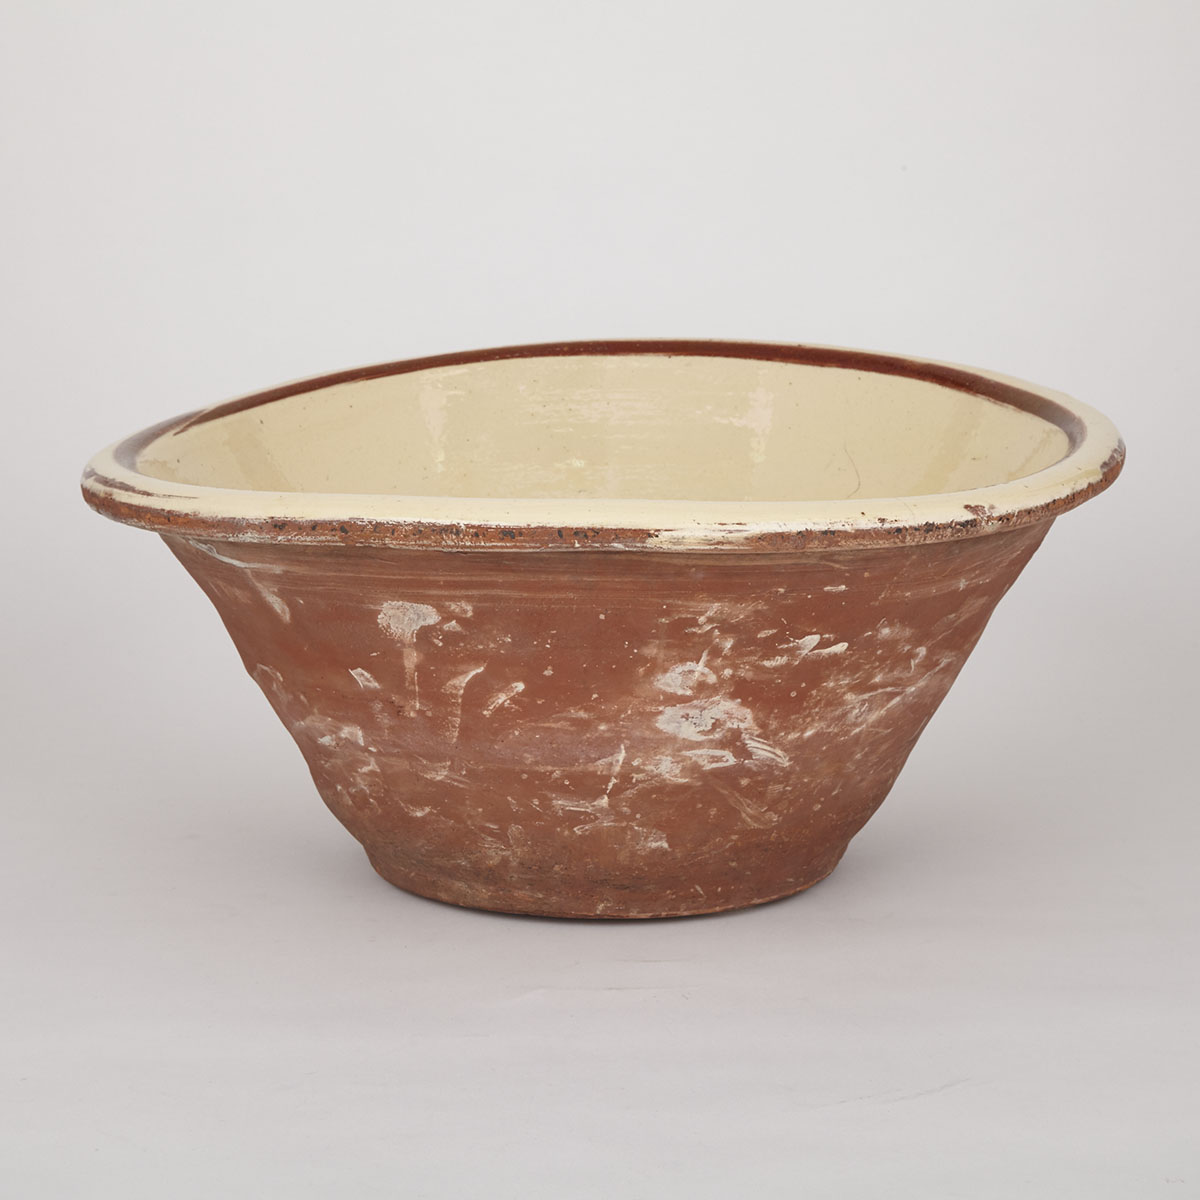 Nova Scotia Red Earthenware Large Bowl, c.1870-80